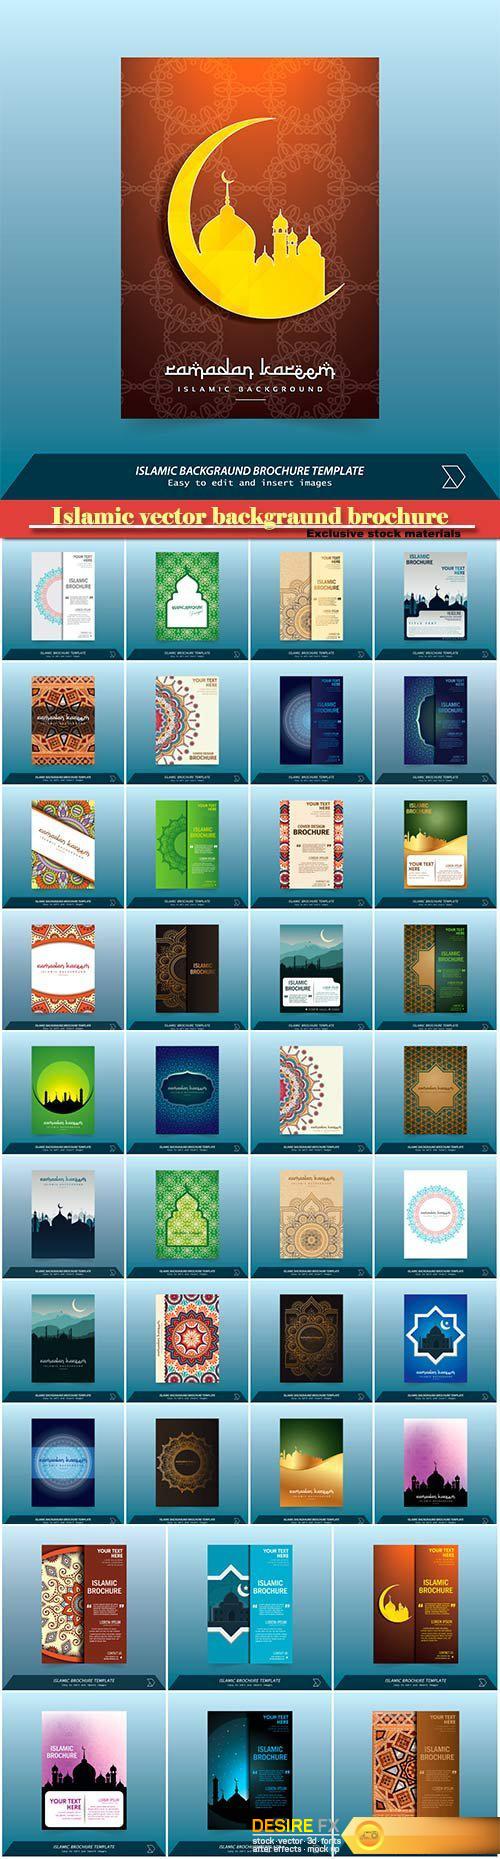 Islamic vector backgraund brochure template